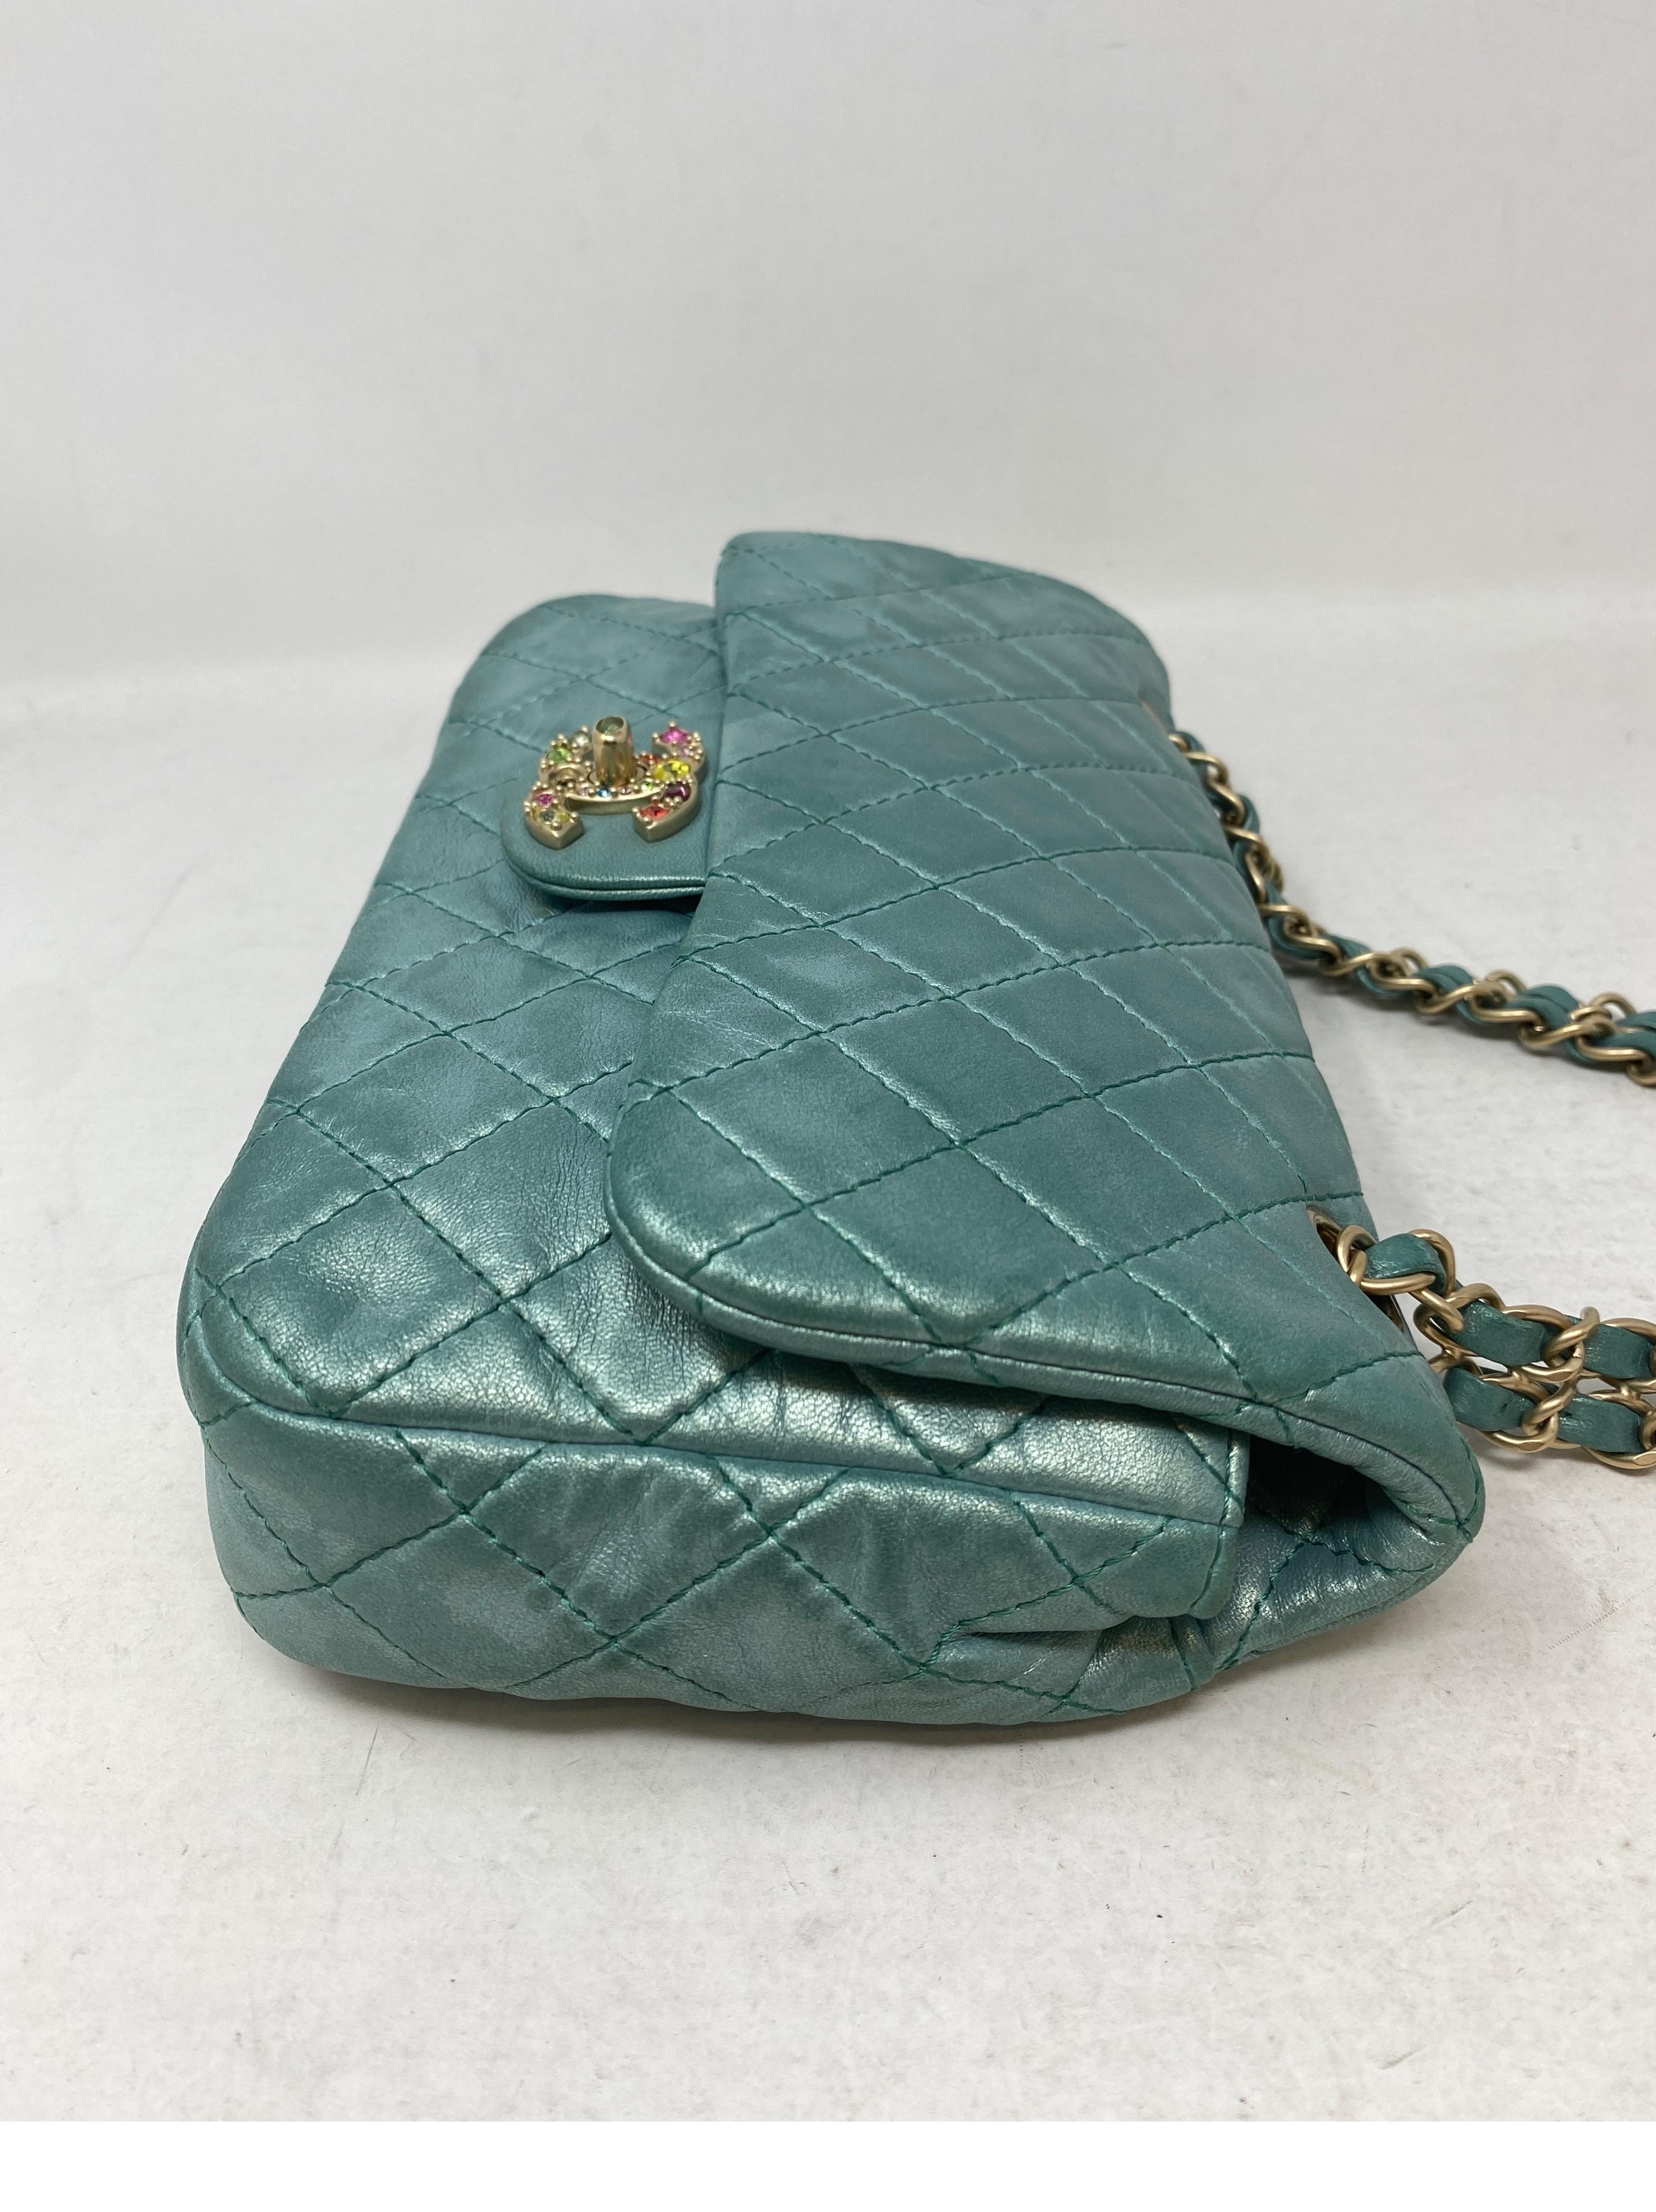 Chanel Teal Jeweled Bag  12